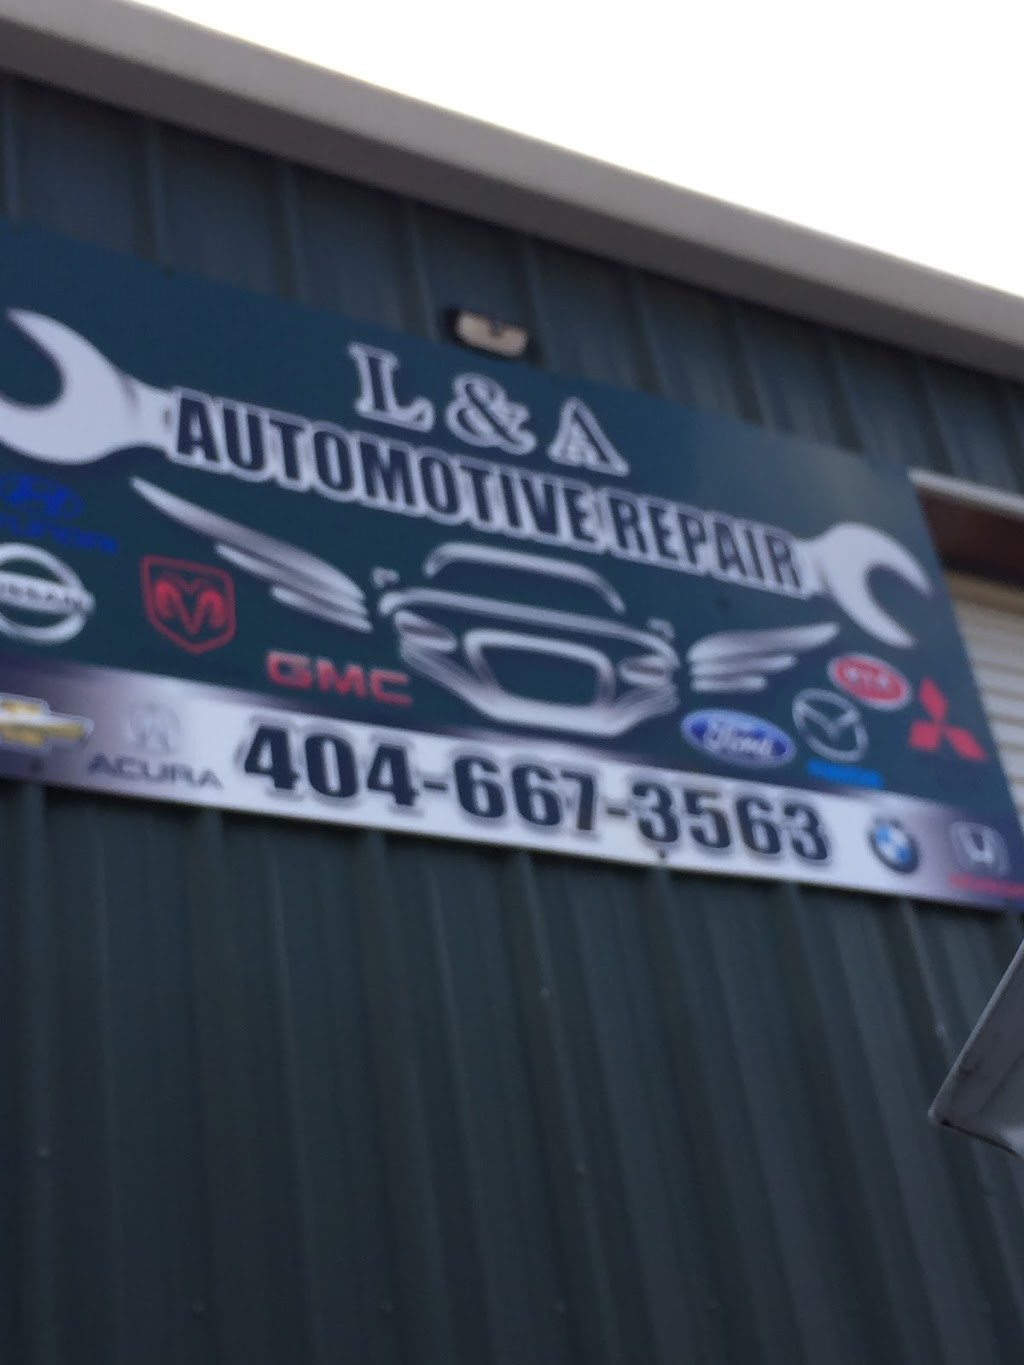 L & A Automotive Repair | 1901 Old Covington Rd NE Suite A, Conyers, GA 30013, USA | Phone: (404) 667-3563